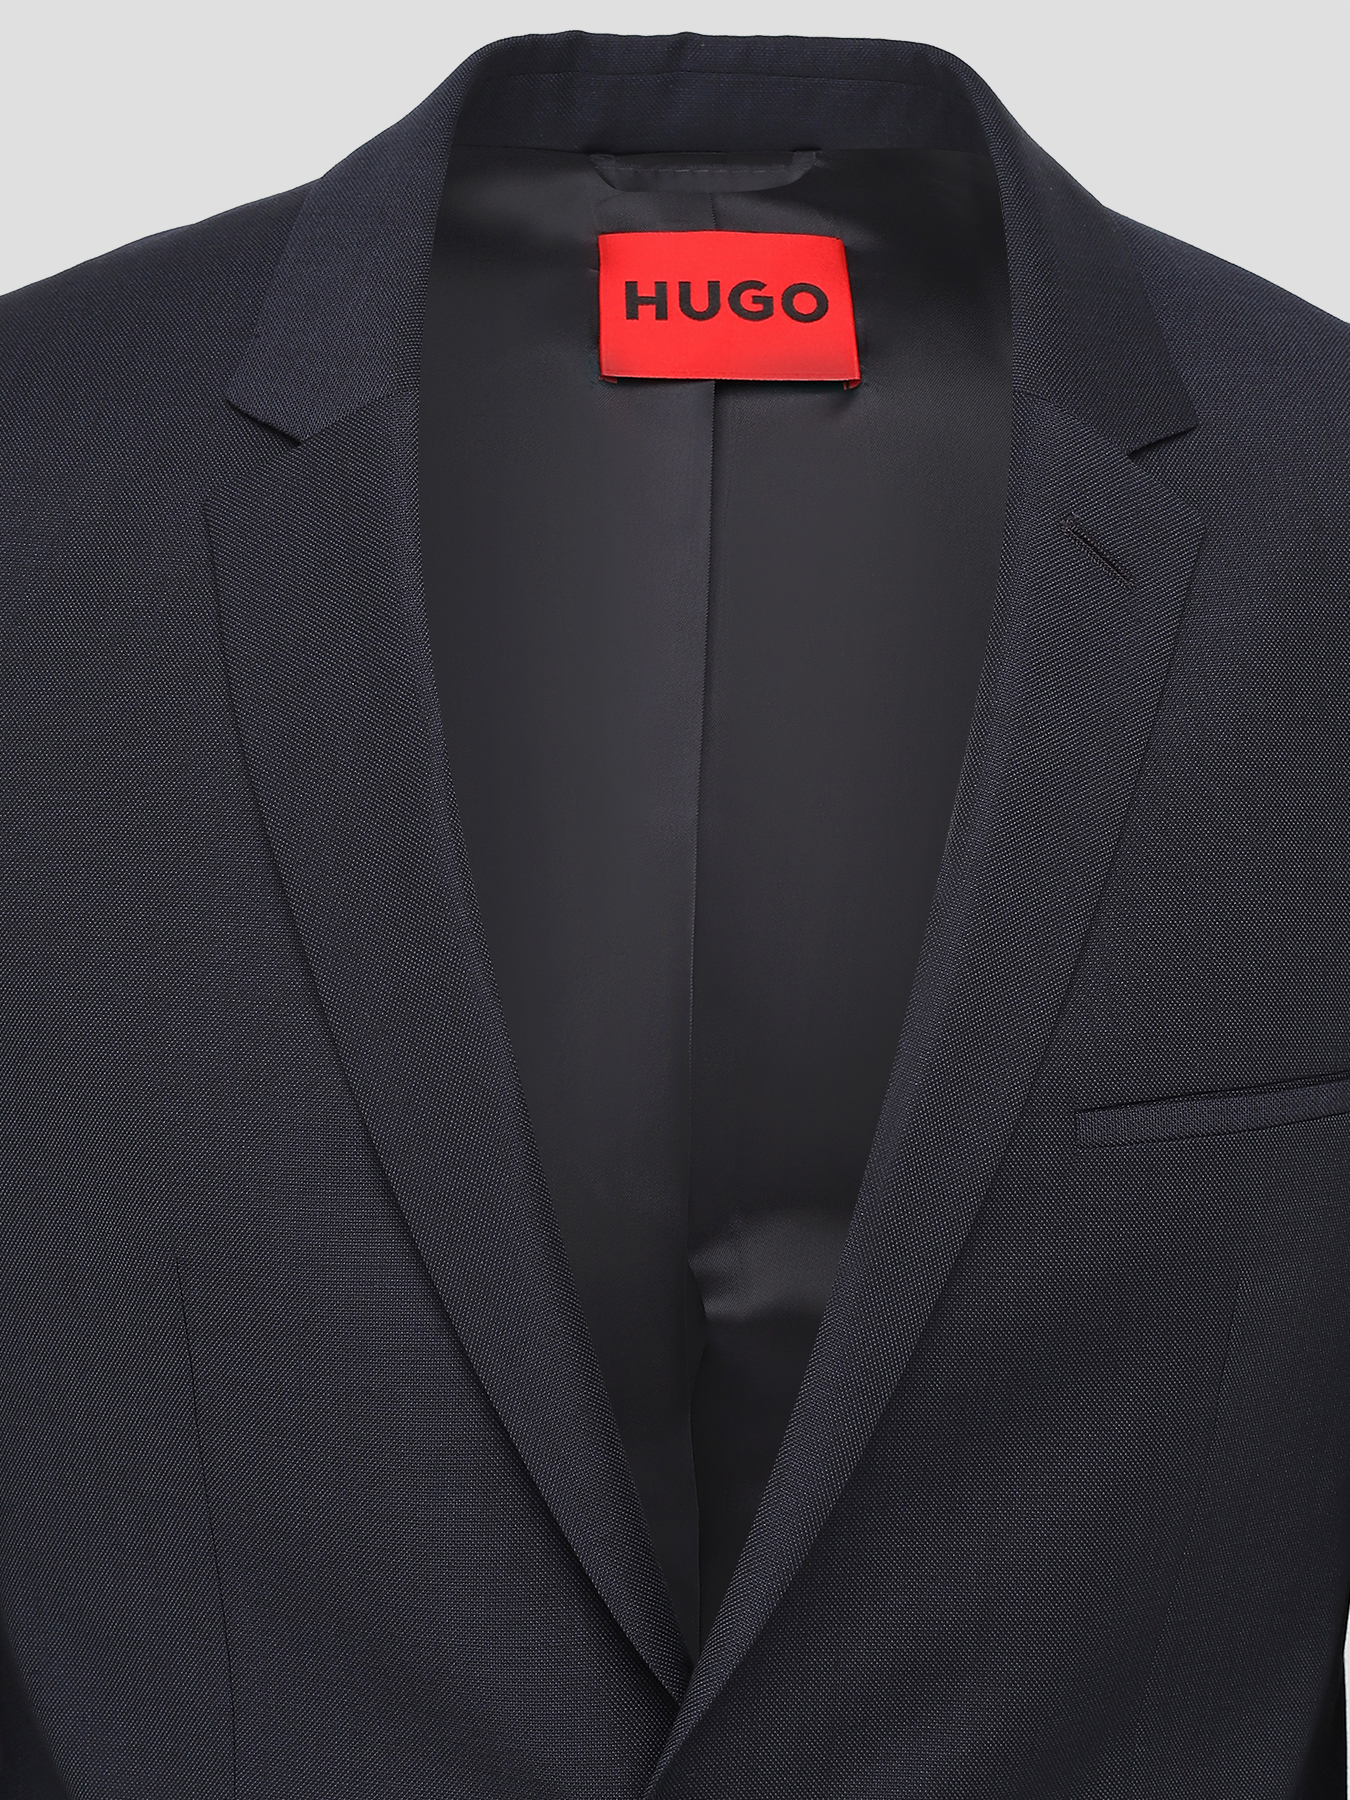 Классический костюм Arti HUGO 424683-027, цвет темно-синий, размер 52 - фото 7